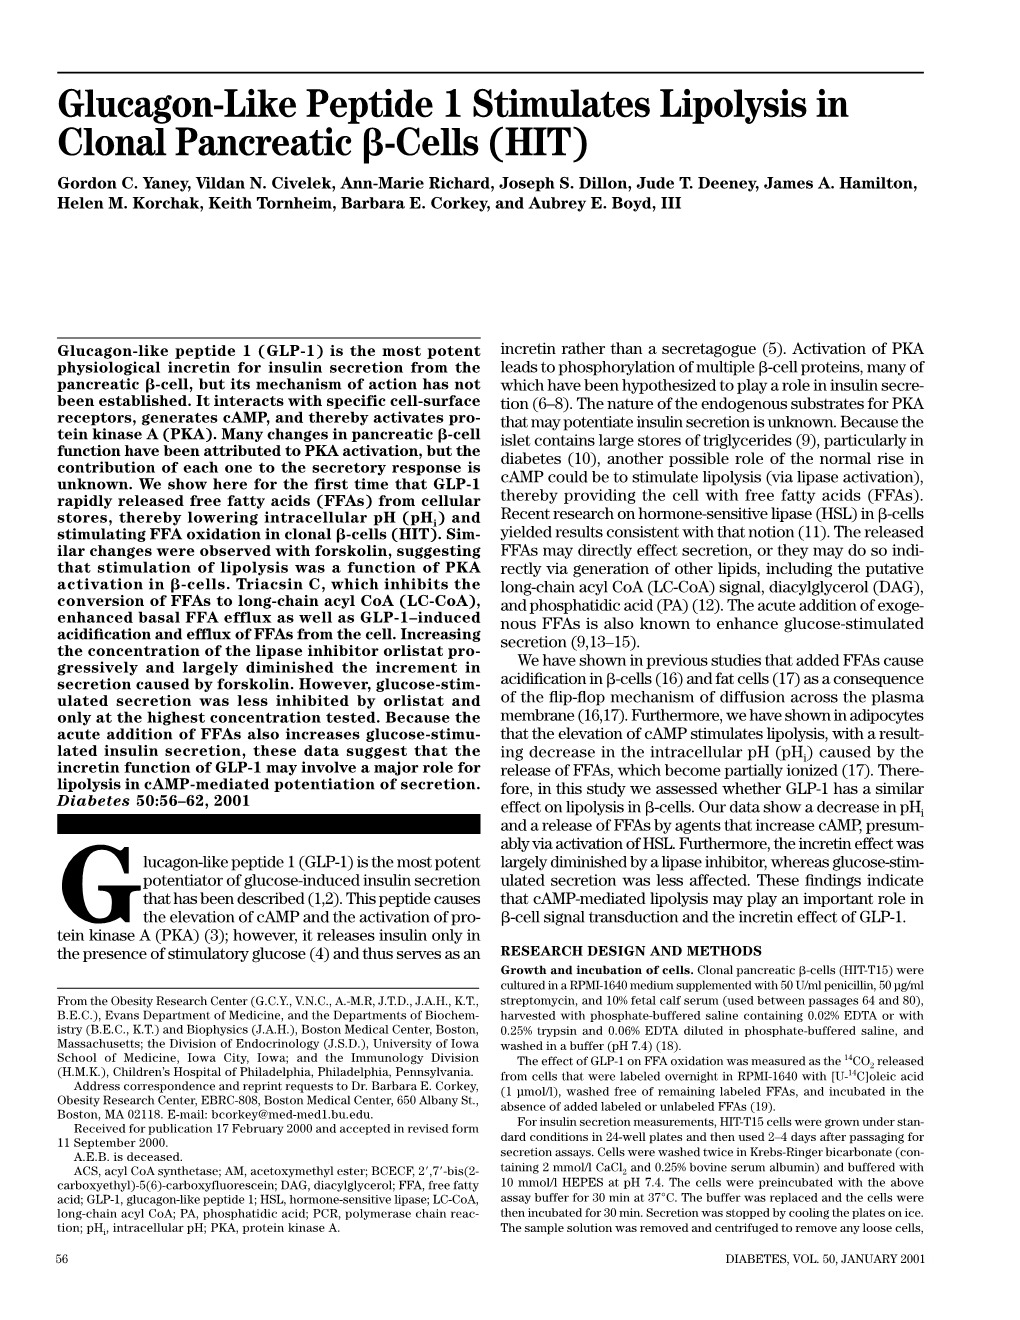 Glucagon-Like Peptide 1 Stimulates Lipolysis in Clonal Pancreatic Я-Cells